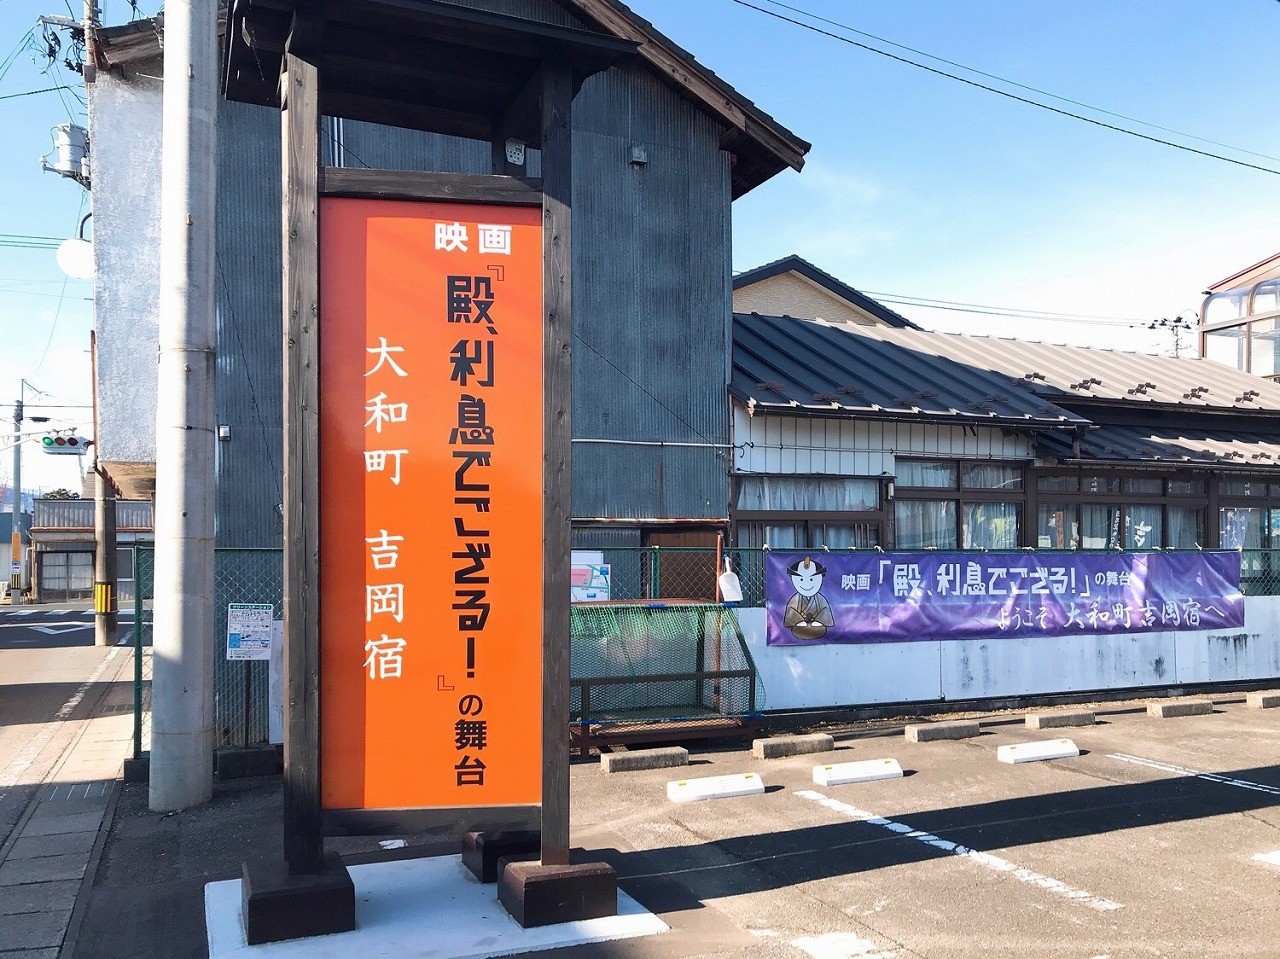 Yoshioka Juku Honjin Information Center (Yamato Town Tourism Product Association)